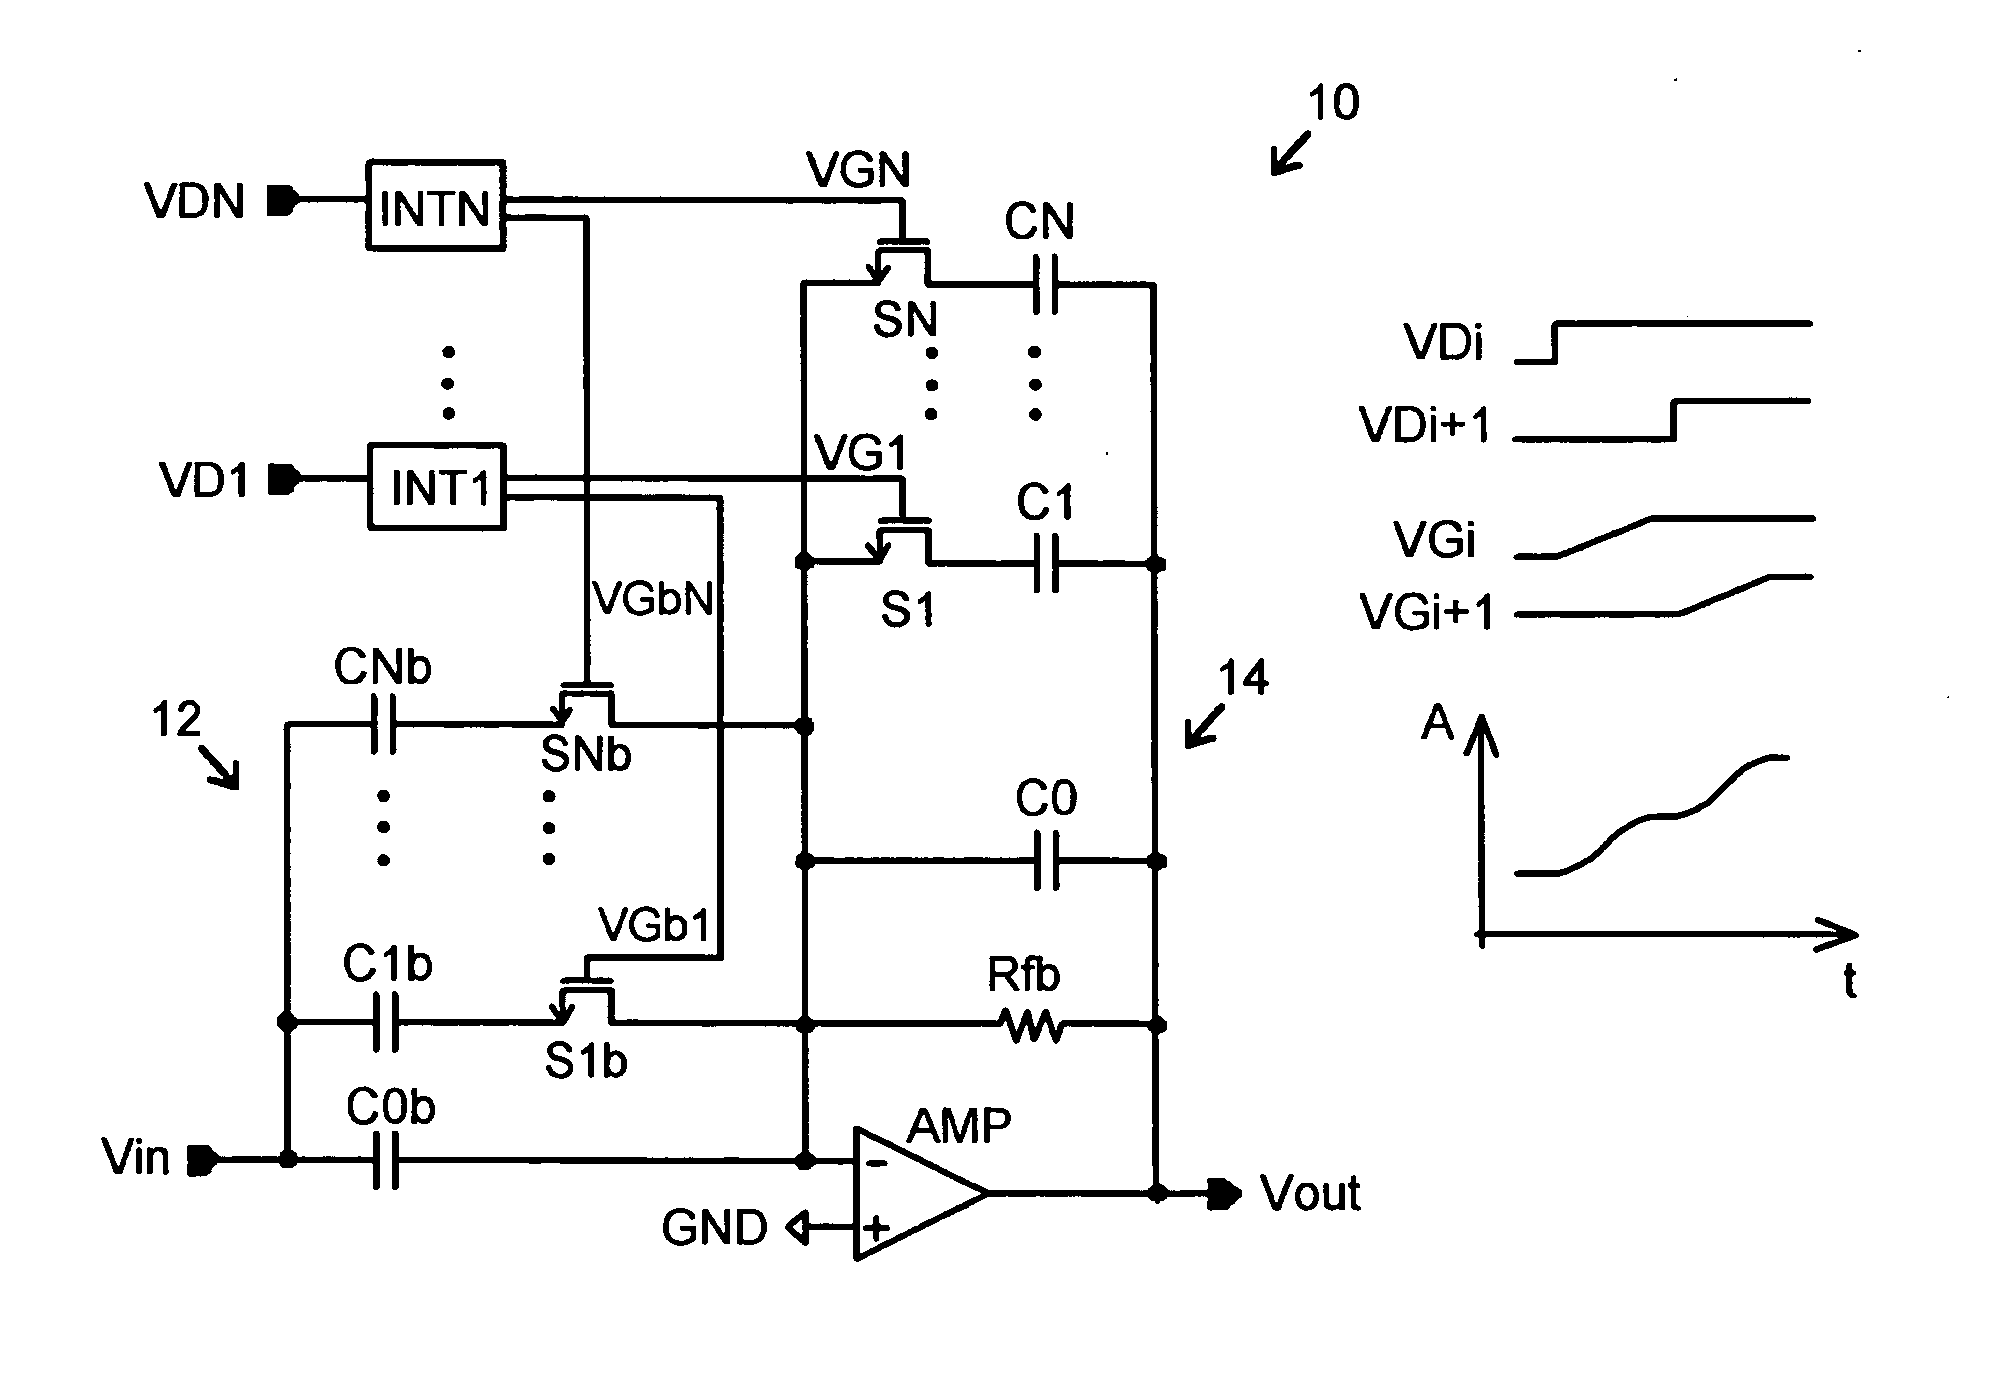 Circuit configuration having a feedback operational amplifier